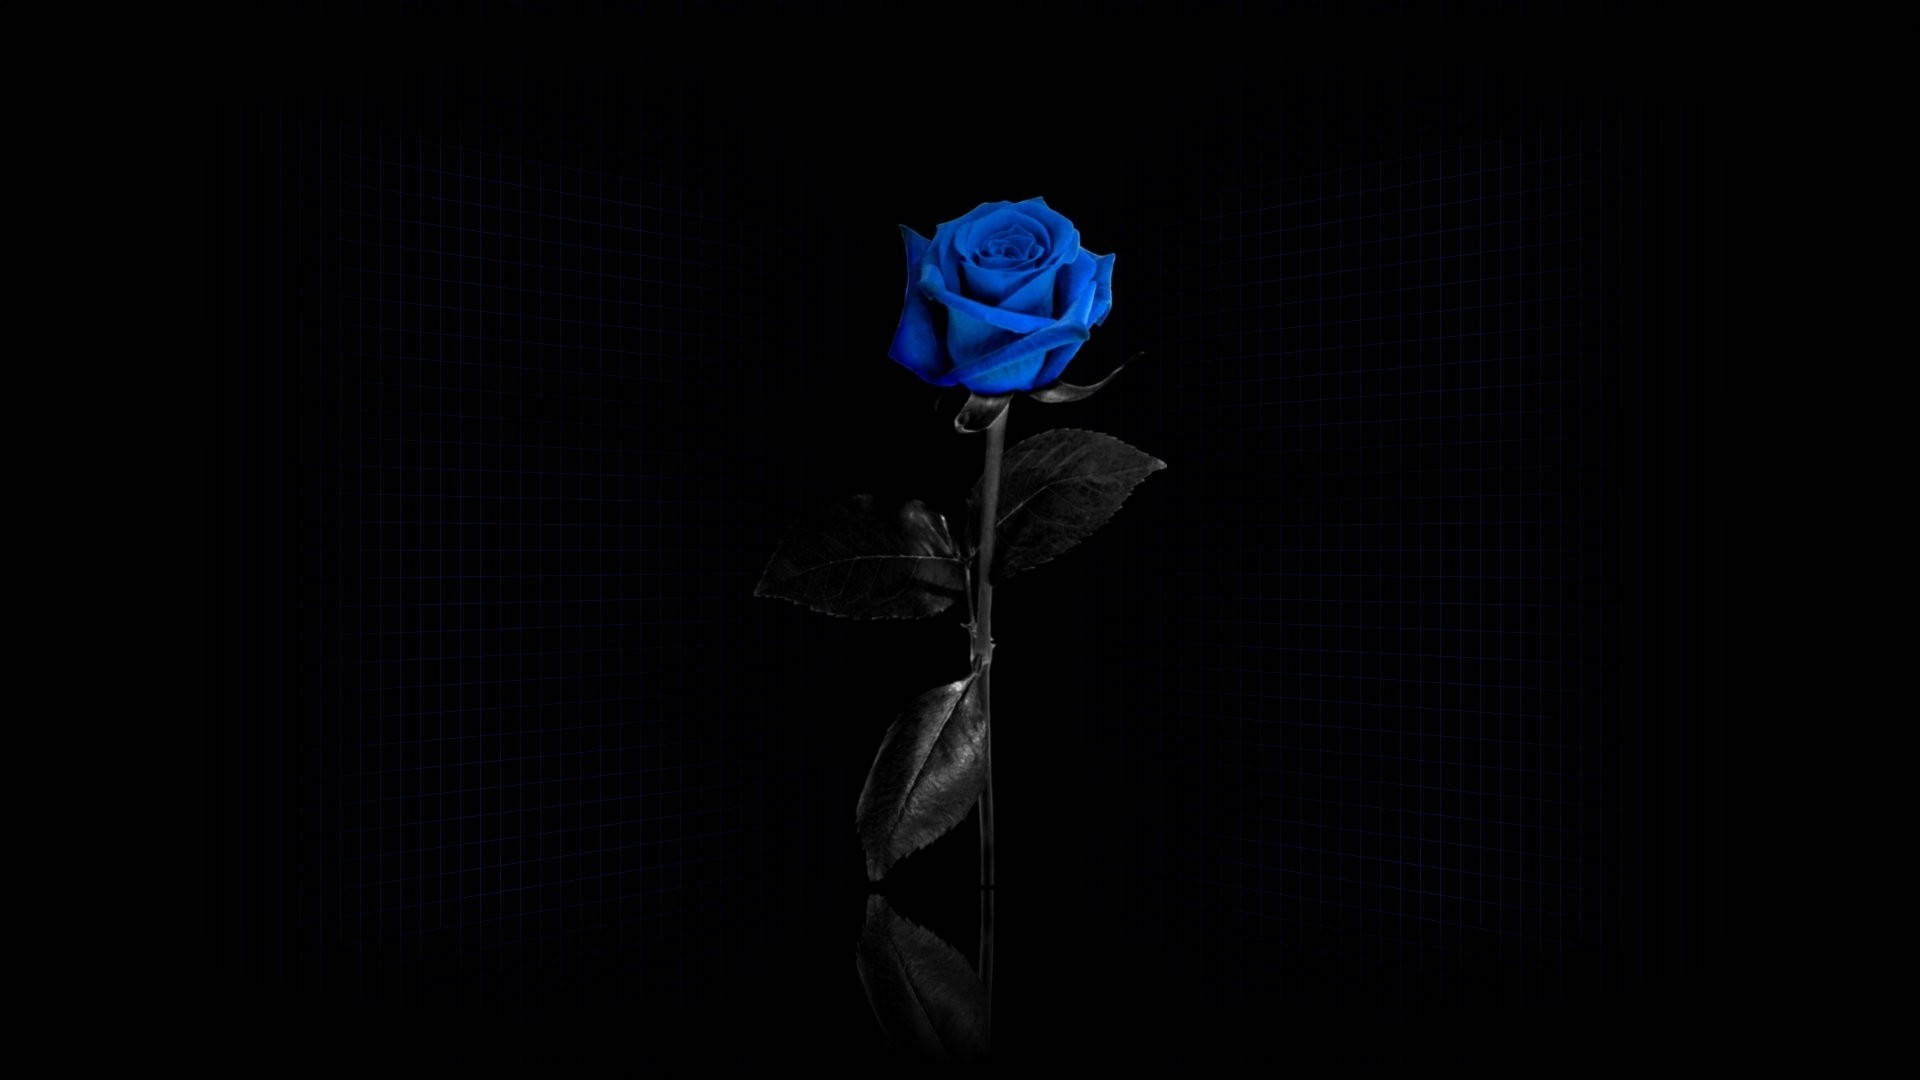 Rose With Beautiful Blue Petals Wallpaper